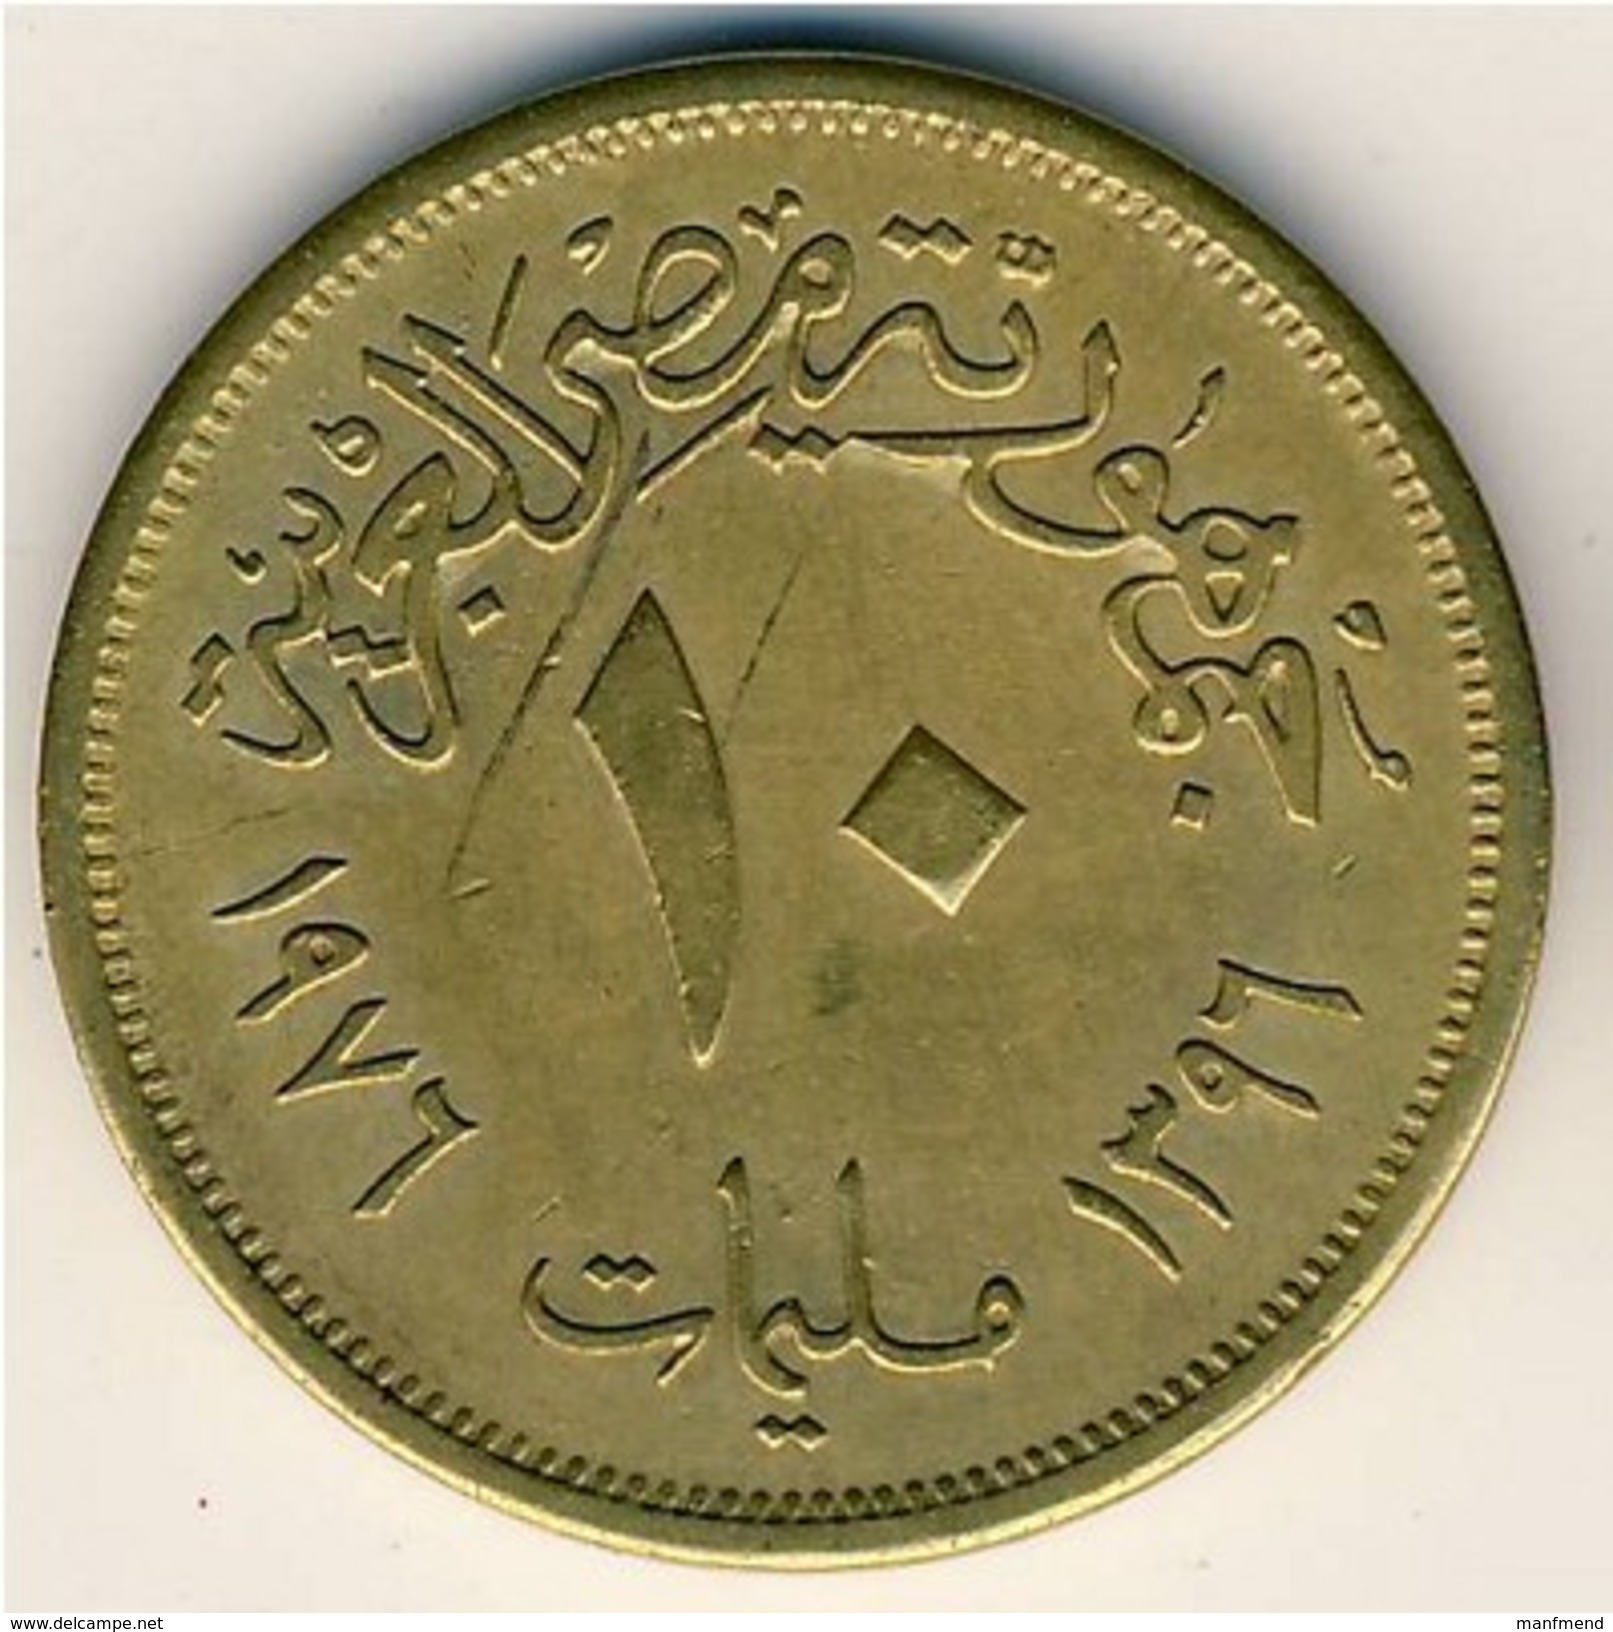 Egypt - 1976 - 10 Milliemes - KM 449 - VF - Aegypten